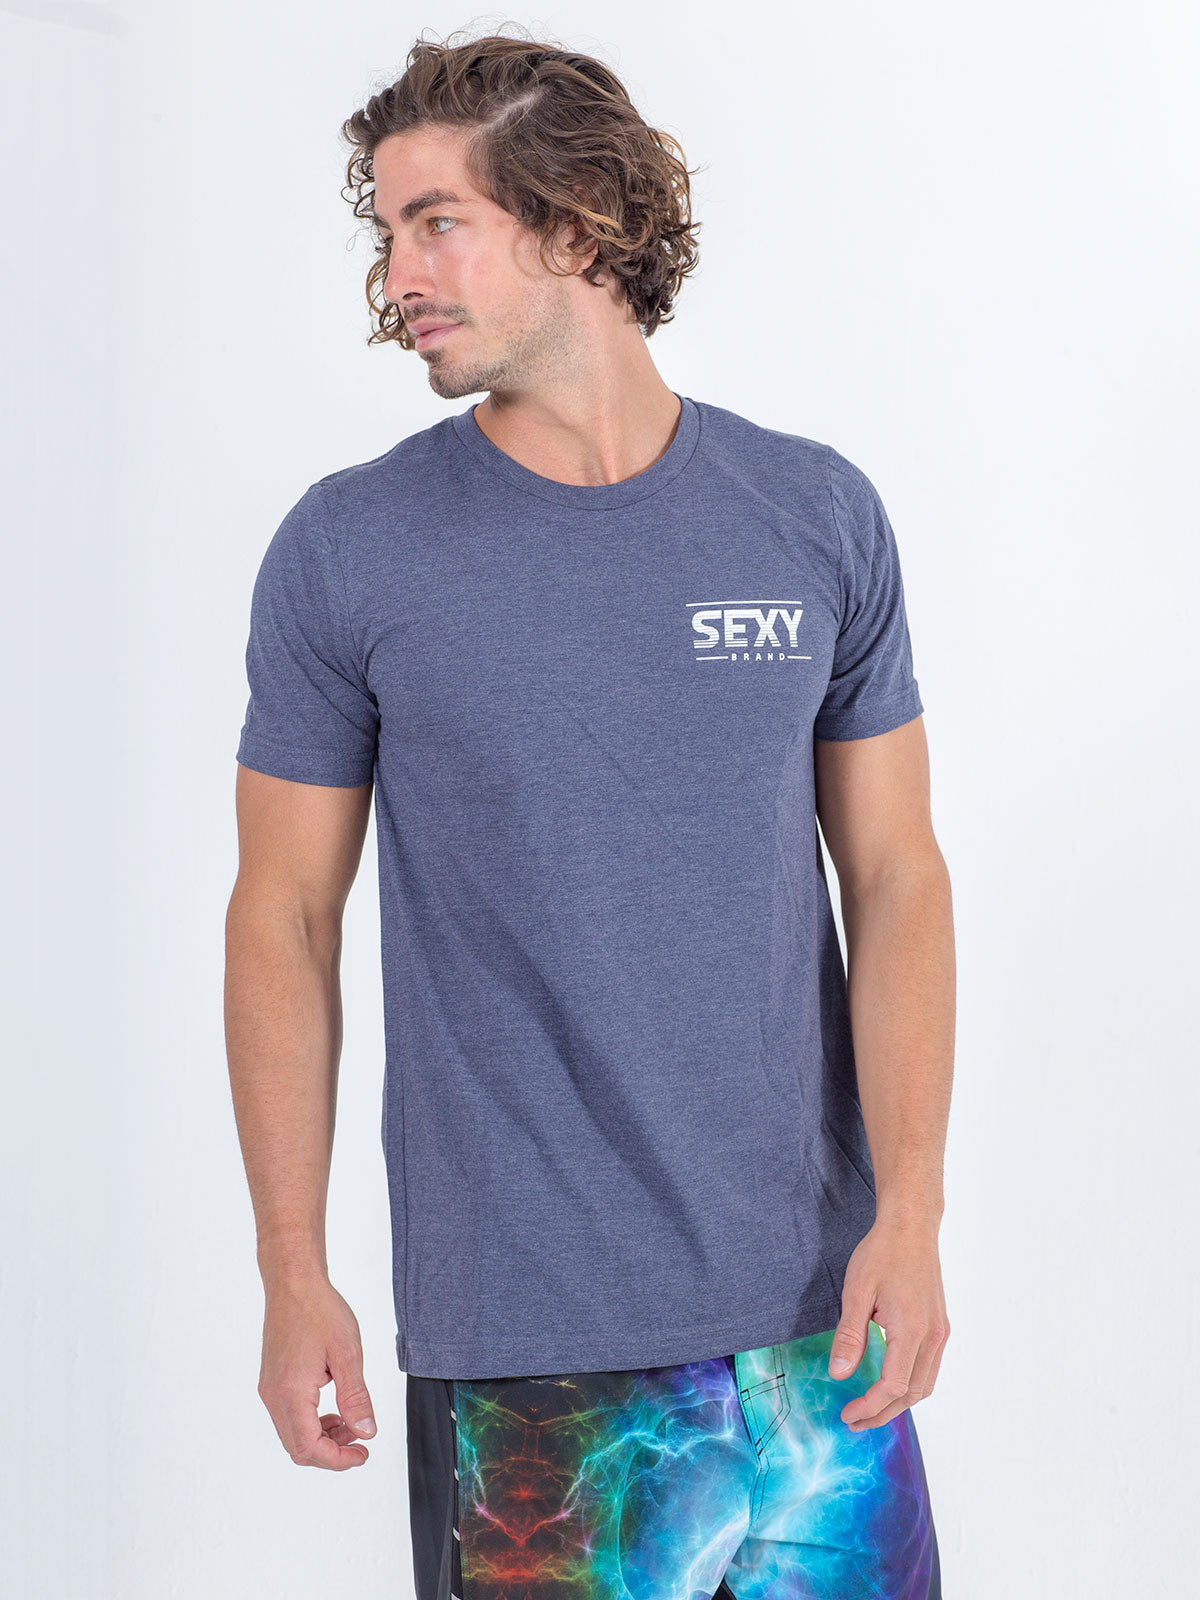 SEXY Brand Emblem T-Shirt in Heather Light Blue